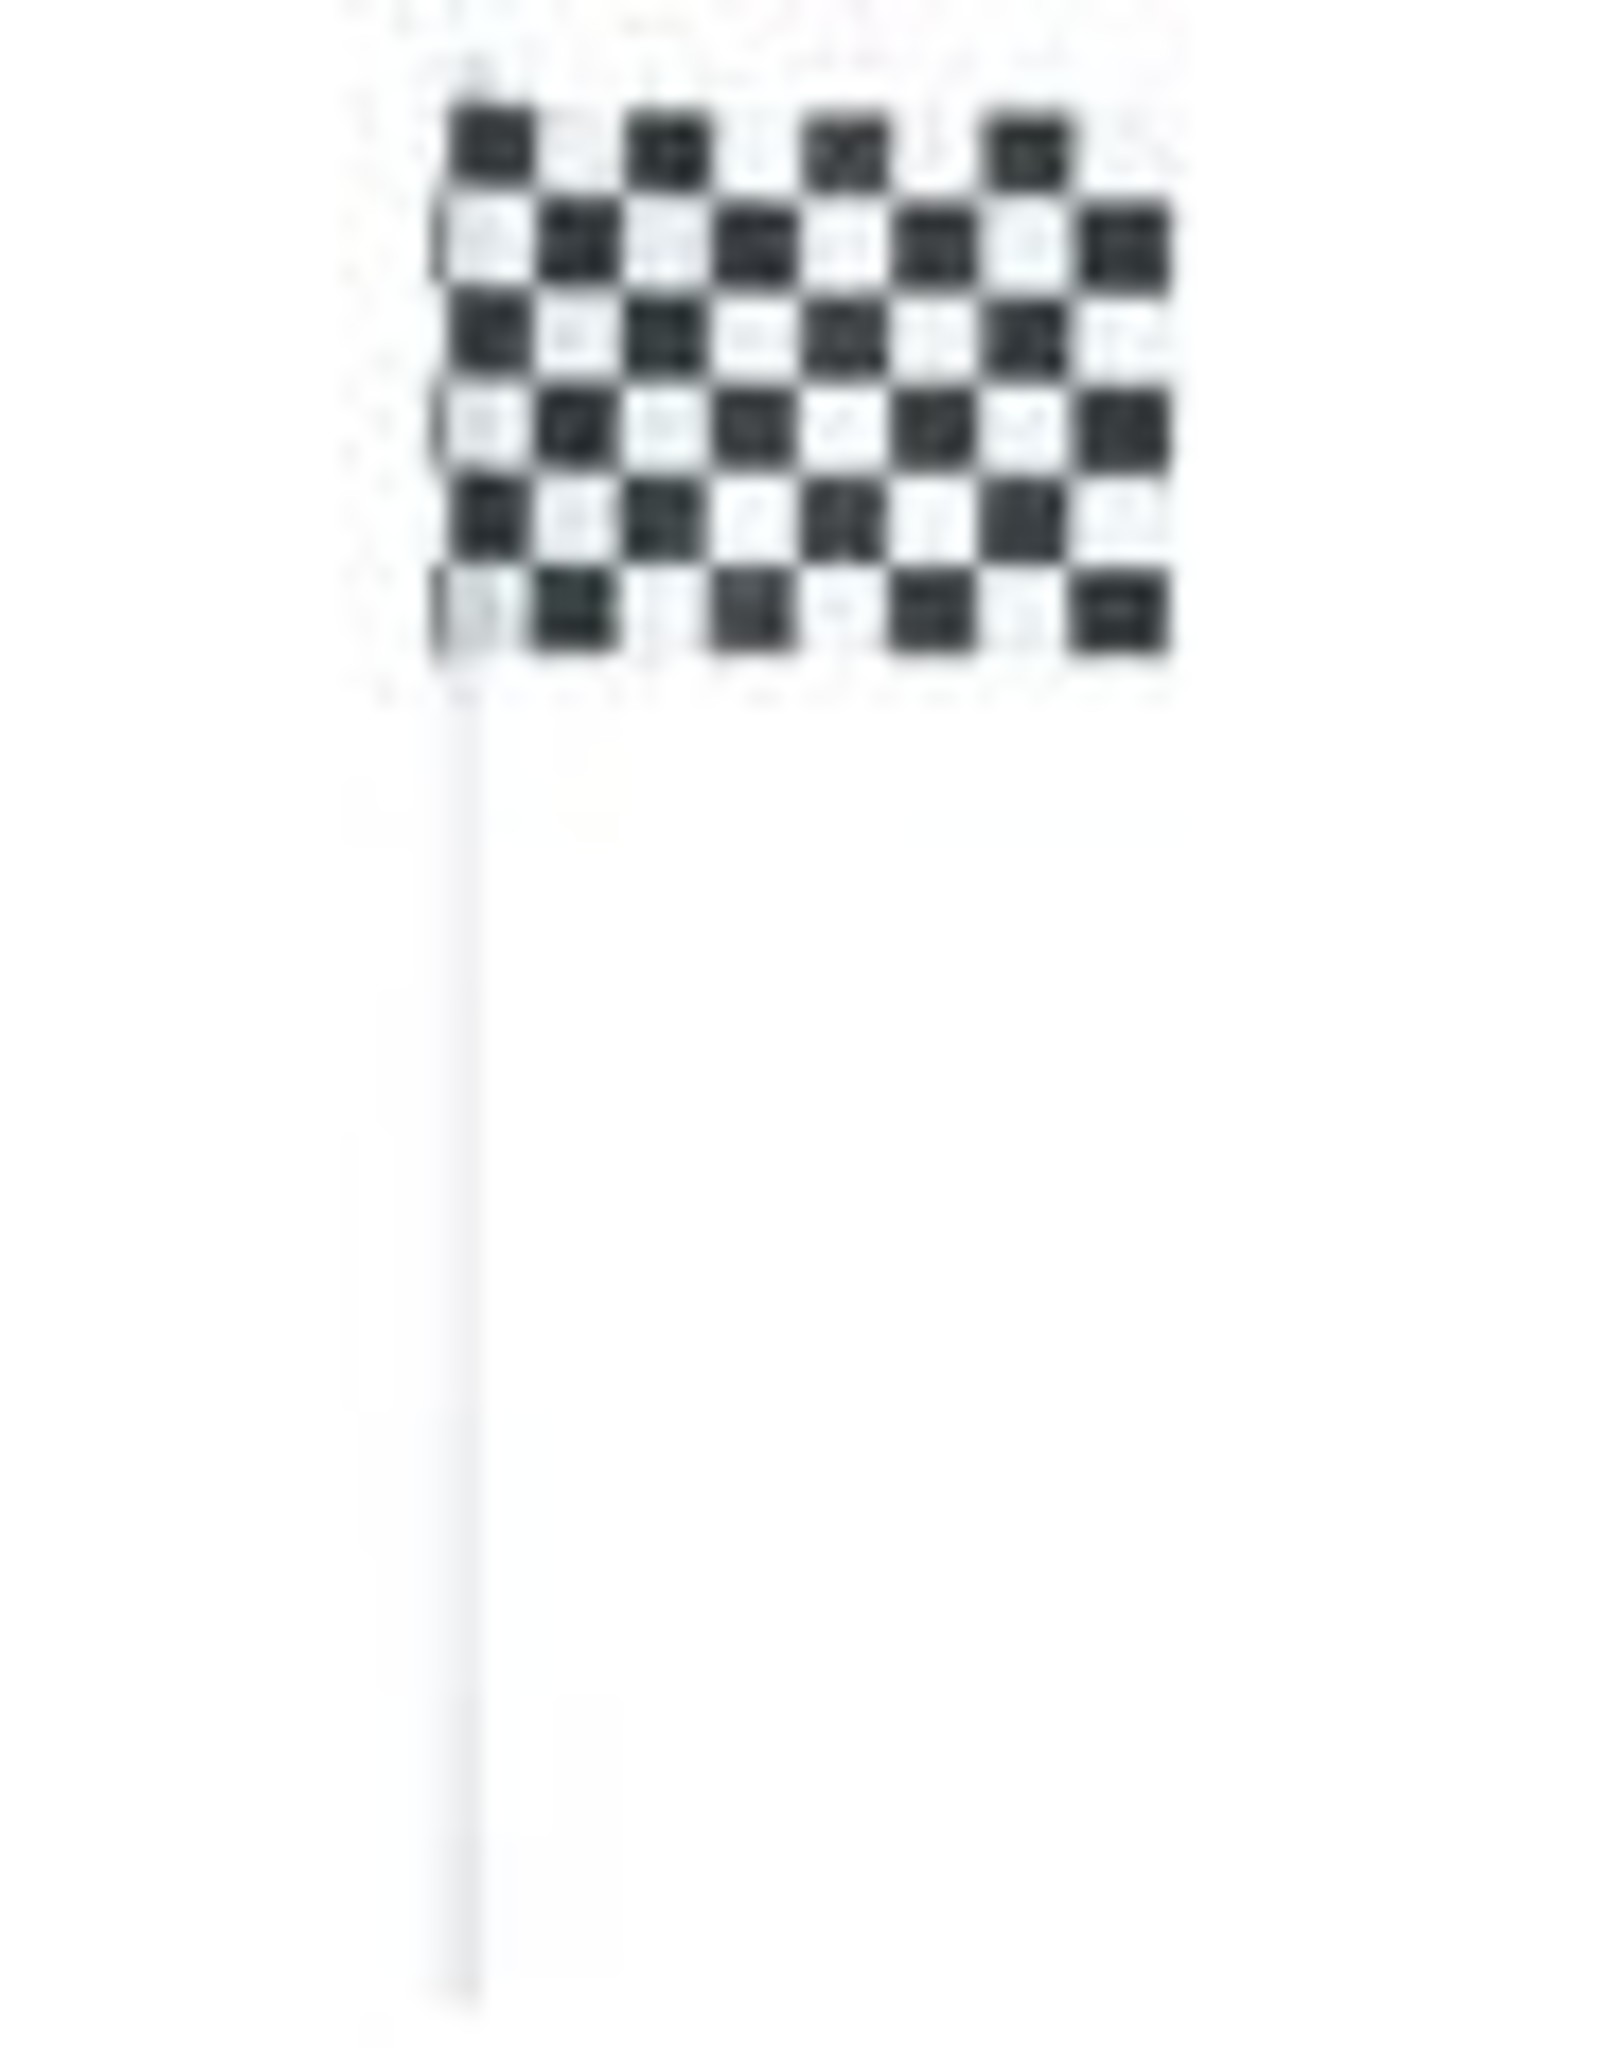 Checkered Flag Cupcake Picks (12ct)